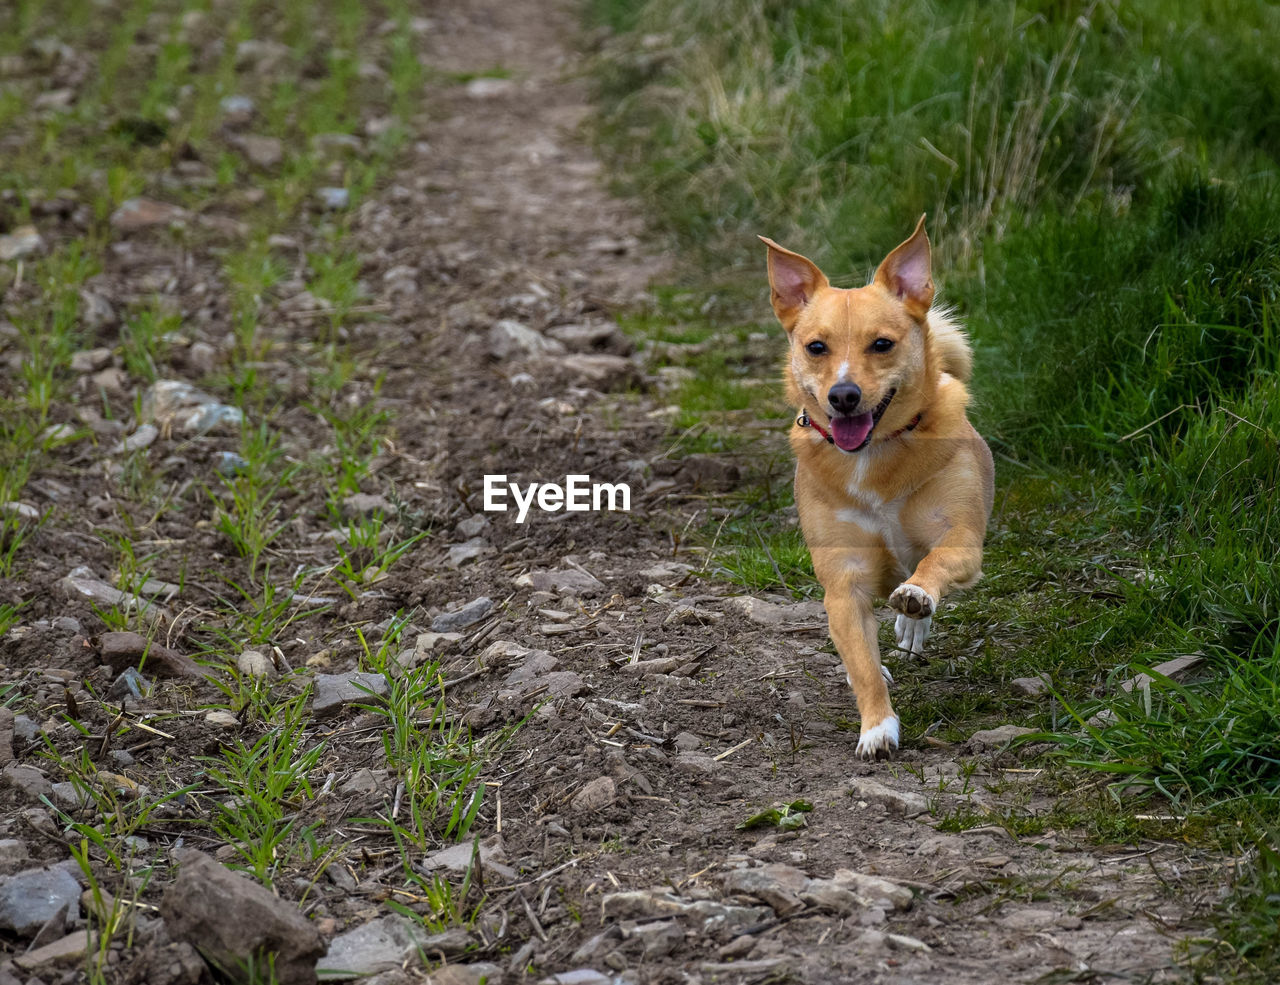 PORTRAIT OF BROWN DOG IN GRASS